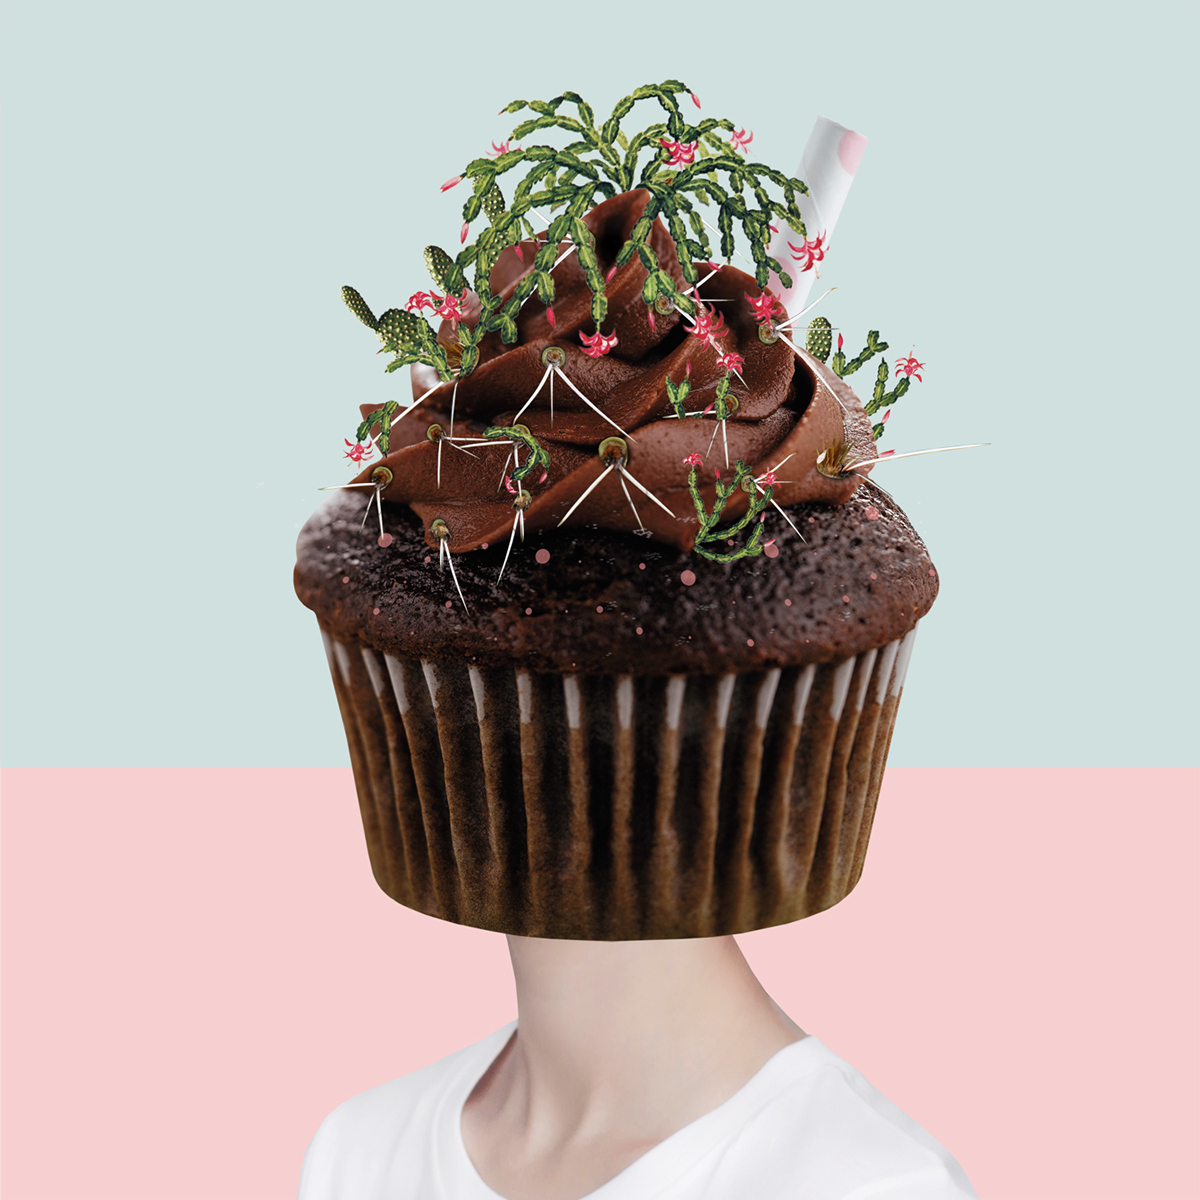 cupcake Food  popart pop modern art Illustrator rad dope vintage Retro cult chic highend pinup